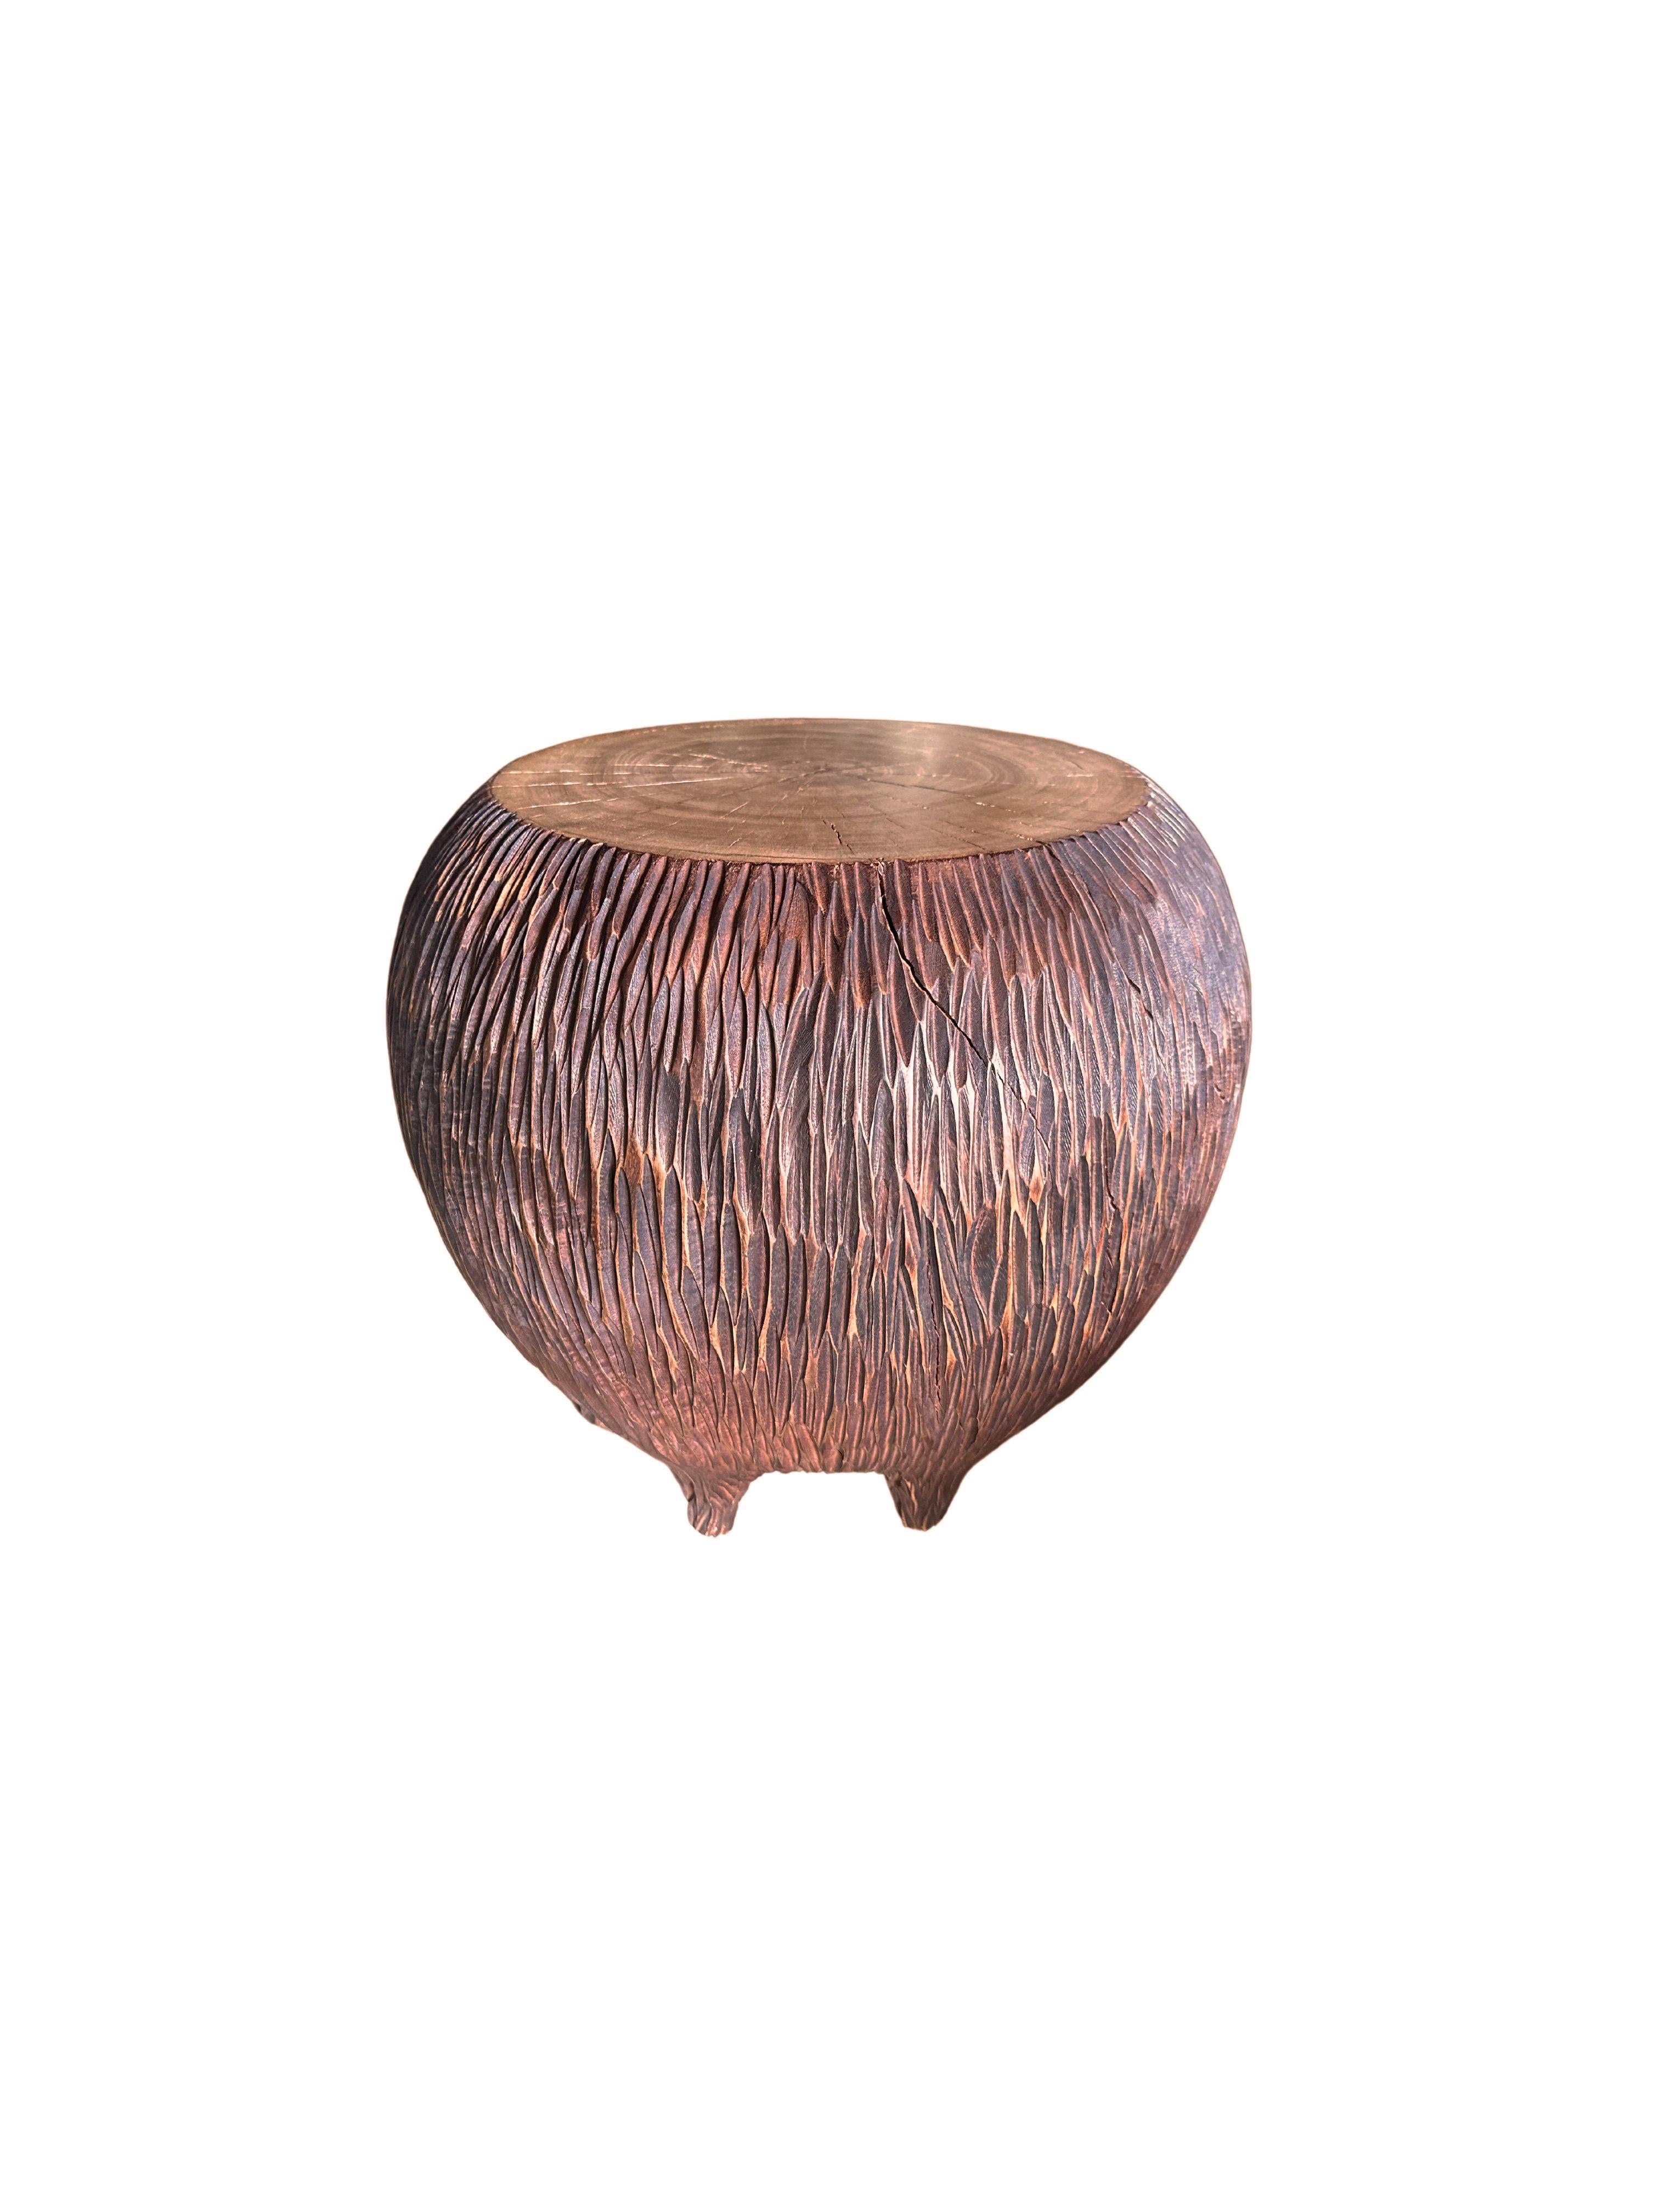 Organic Modern Sculptural Side Table Solid Mango Wood, Hand-Hewn Detailing, Modern Organic For Sale